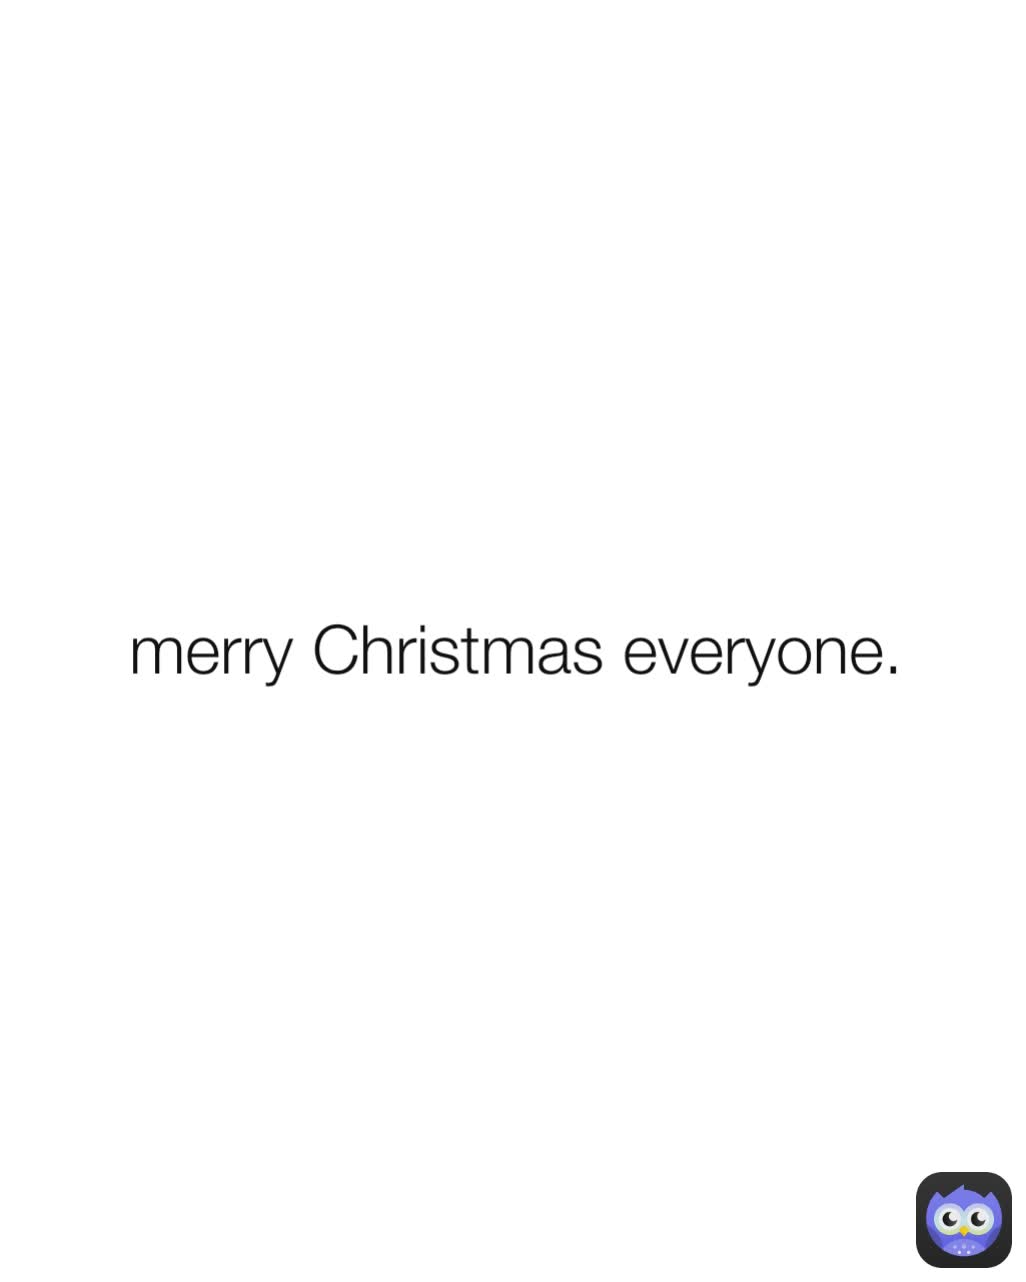 merry Christmas everyone.